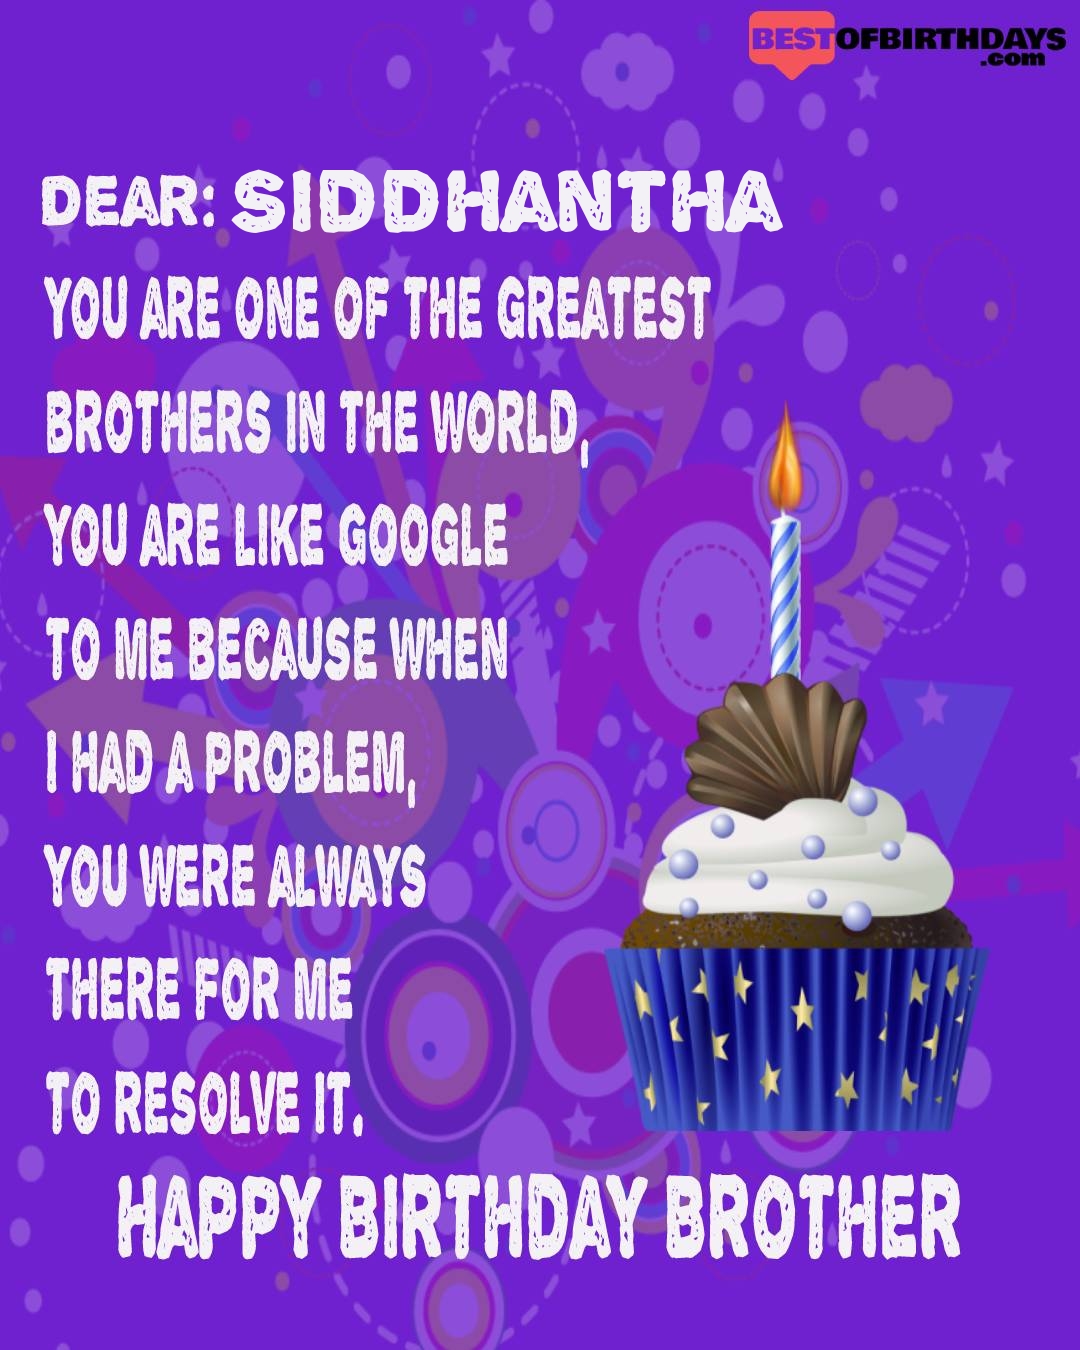 Happy birthday siddhantha bhai brother bro